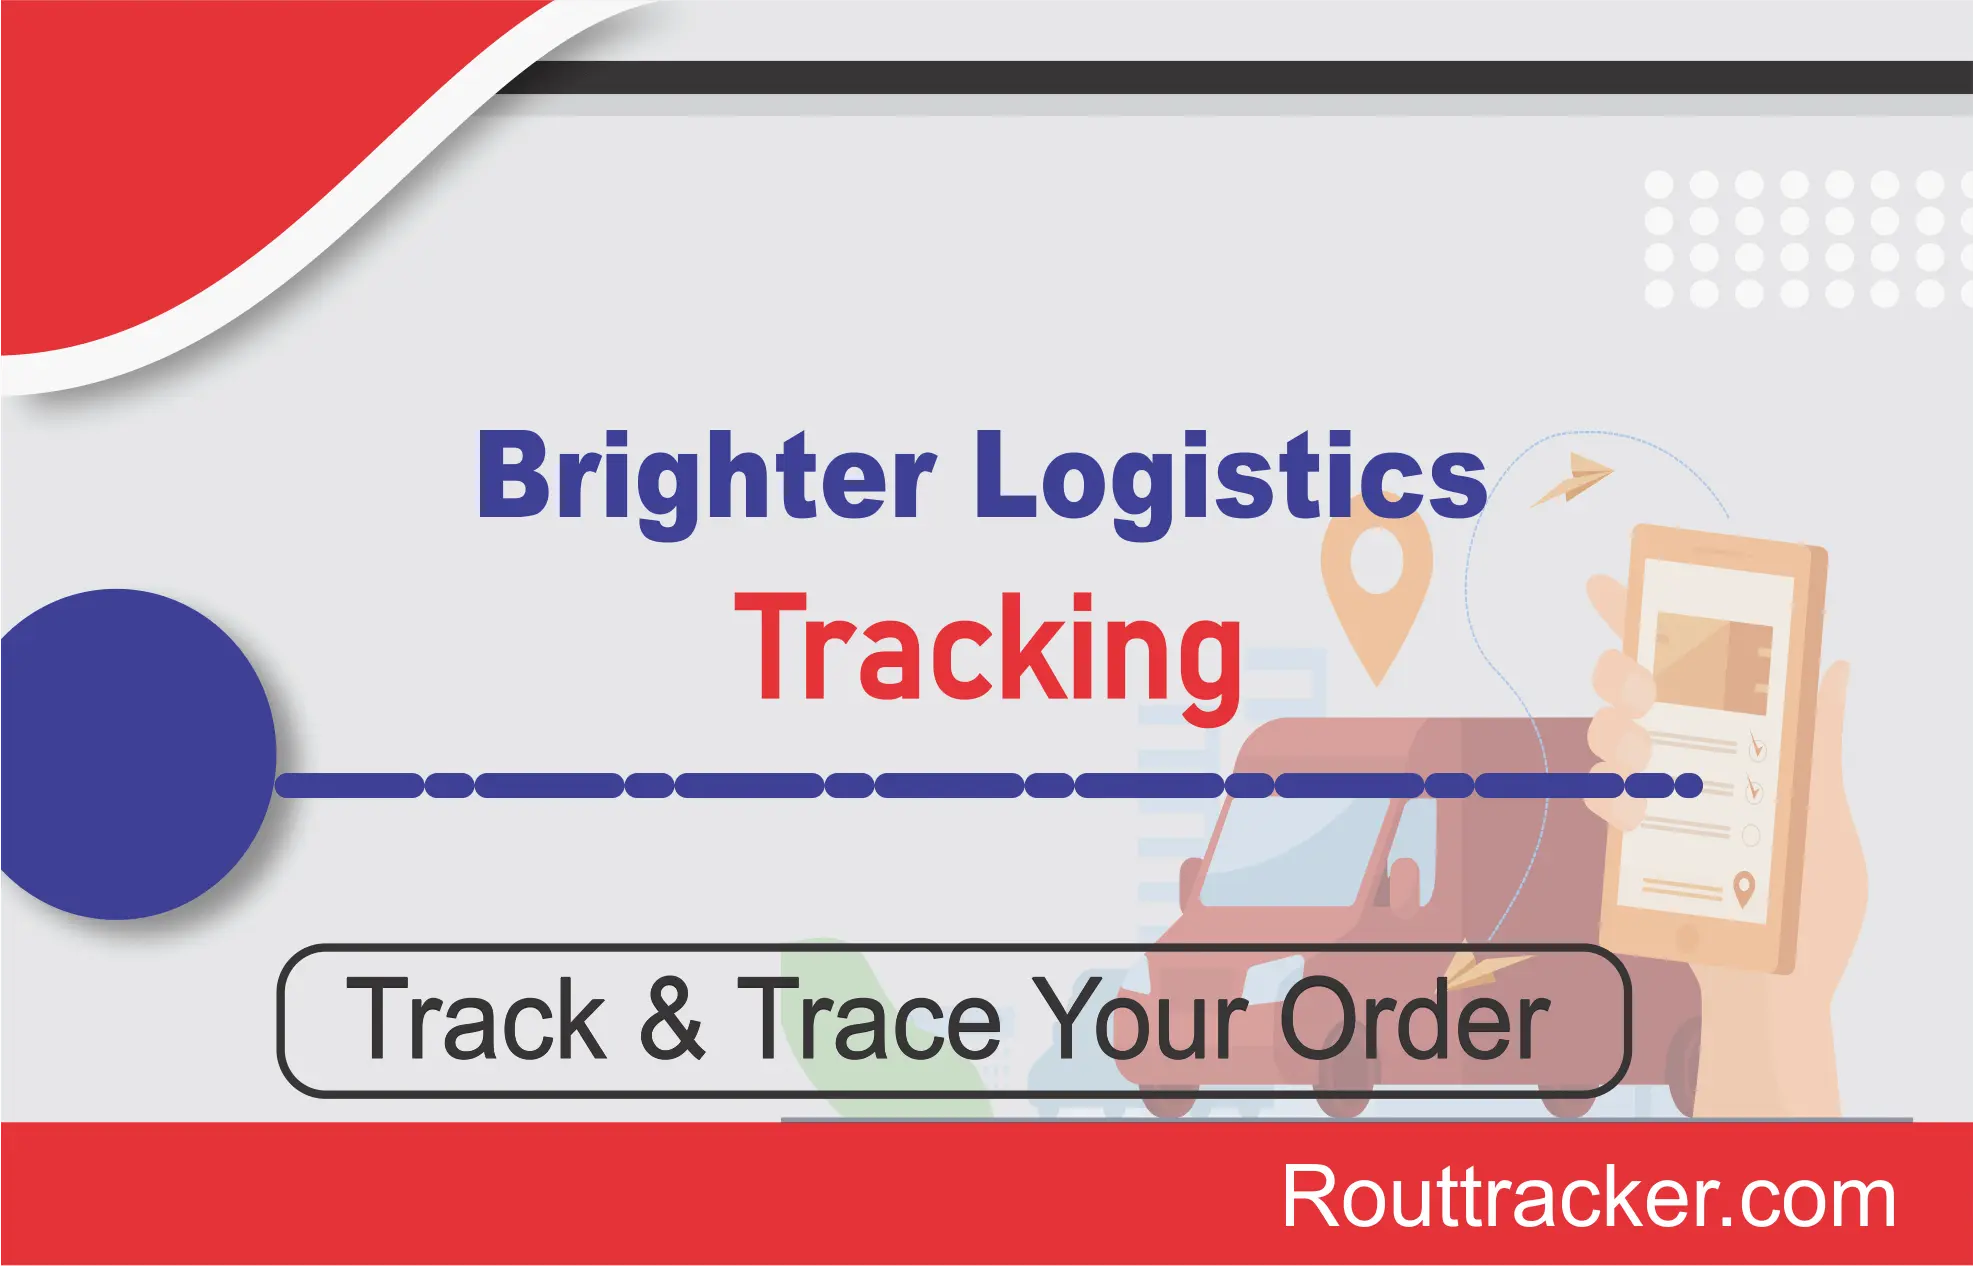 Brighter Logistics Tracking